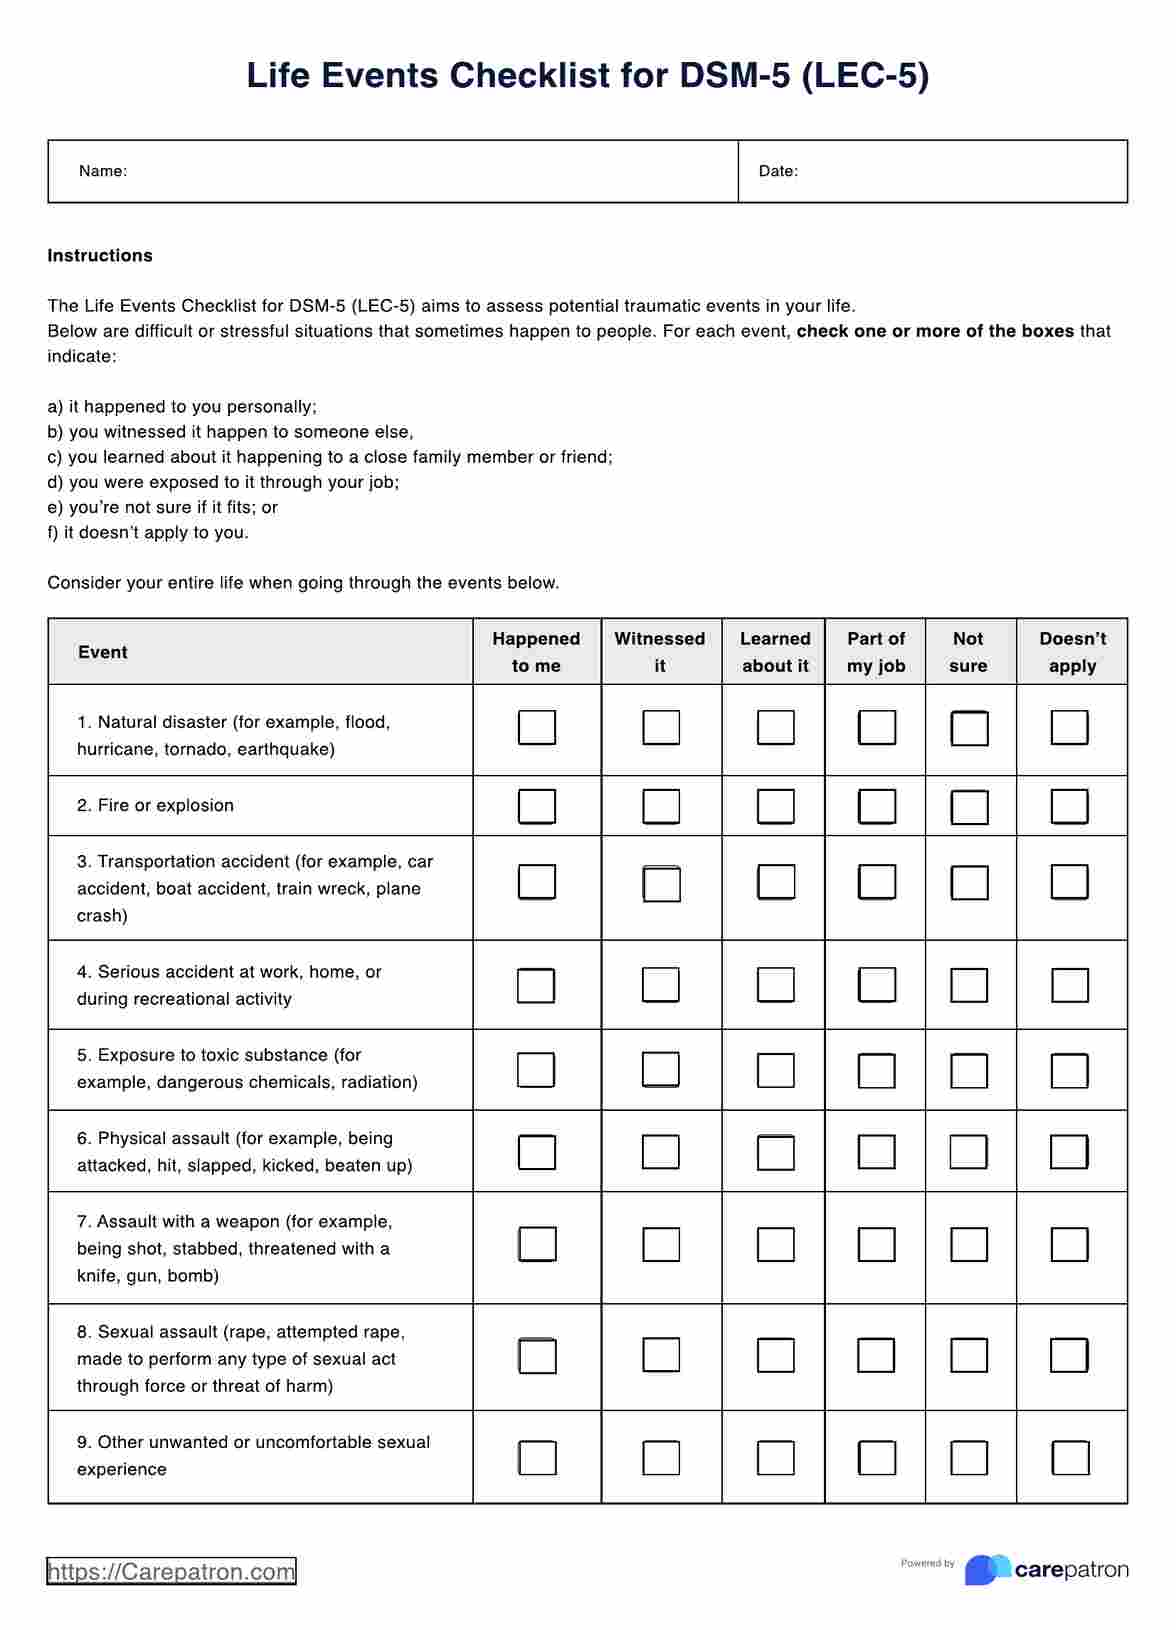 Life Events Checklist for DSM-5 (LEC-5) PDF Example